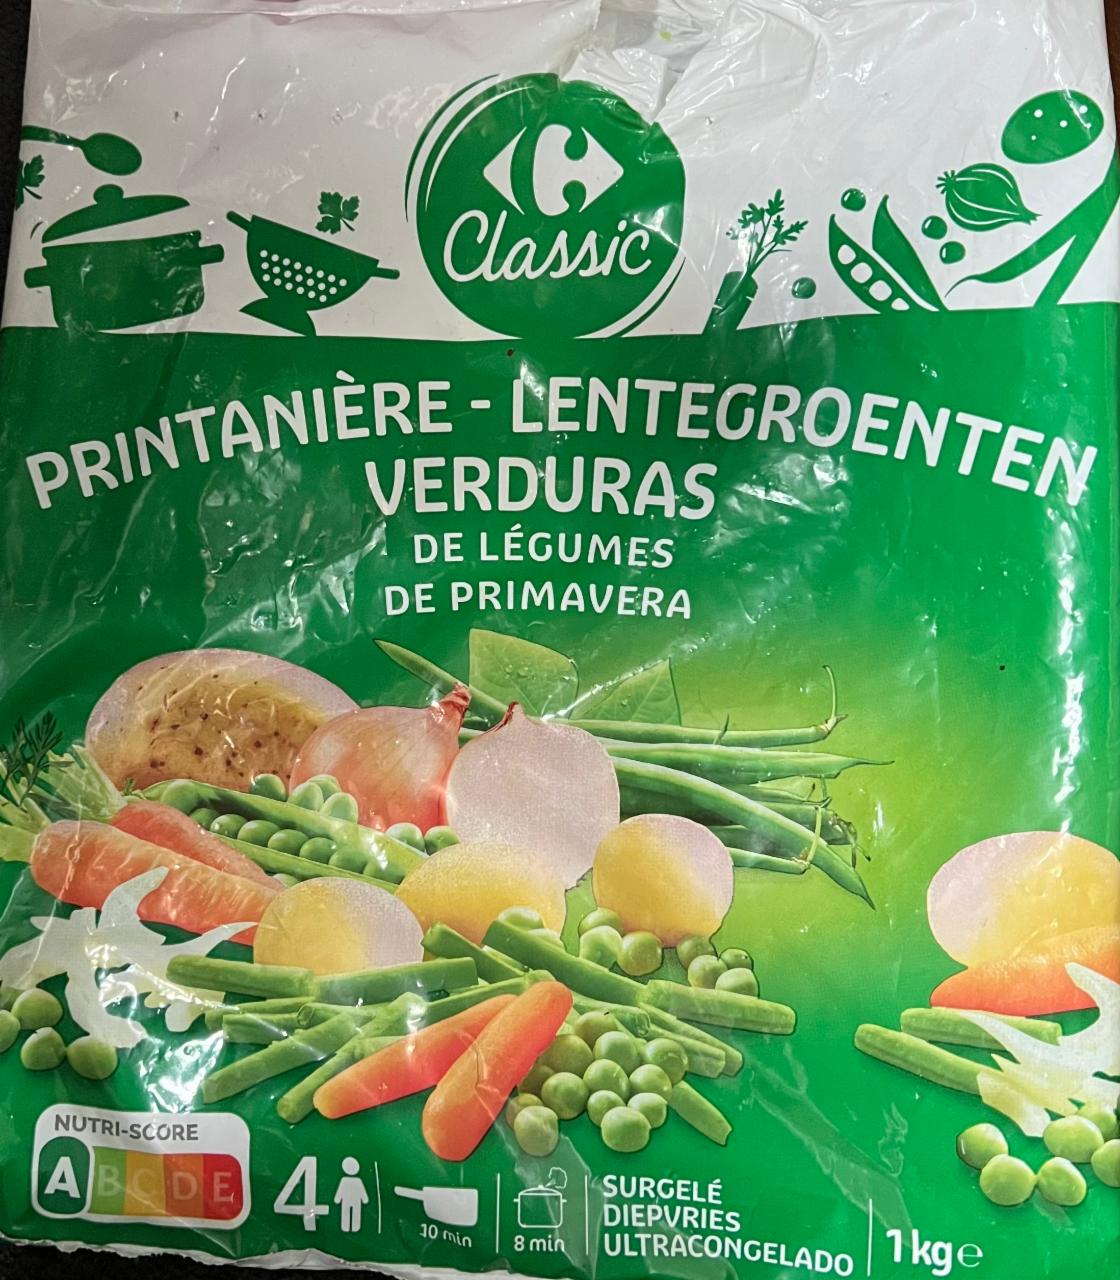 Fotografie - Printanière-lentagroenten verduras Carrefour Classic